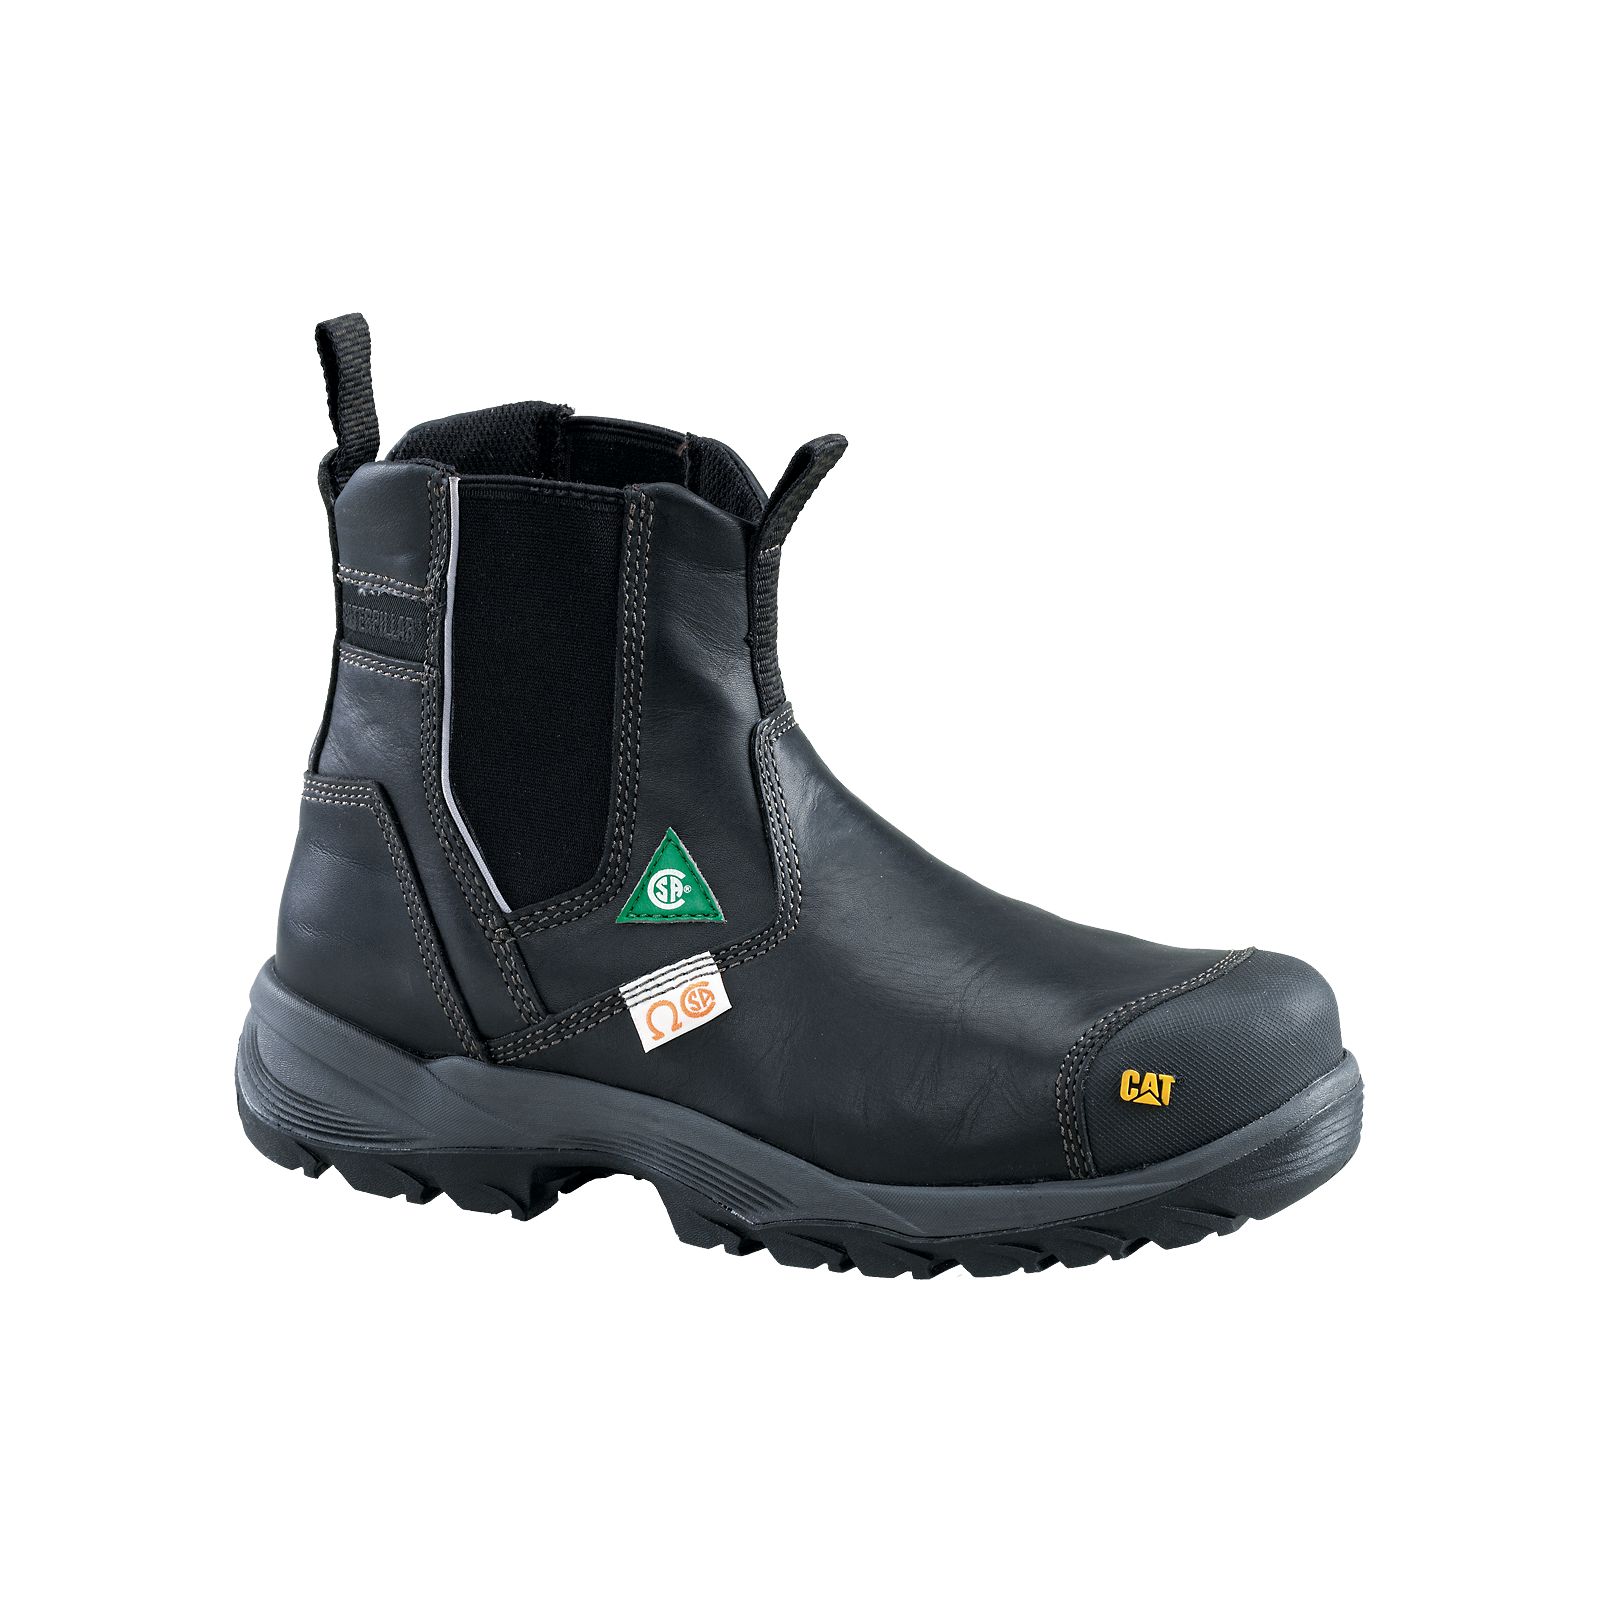 Black Caterpillar Propane Csa Men's Work Boots | Cat-864321